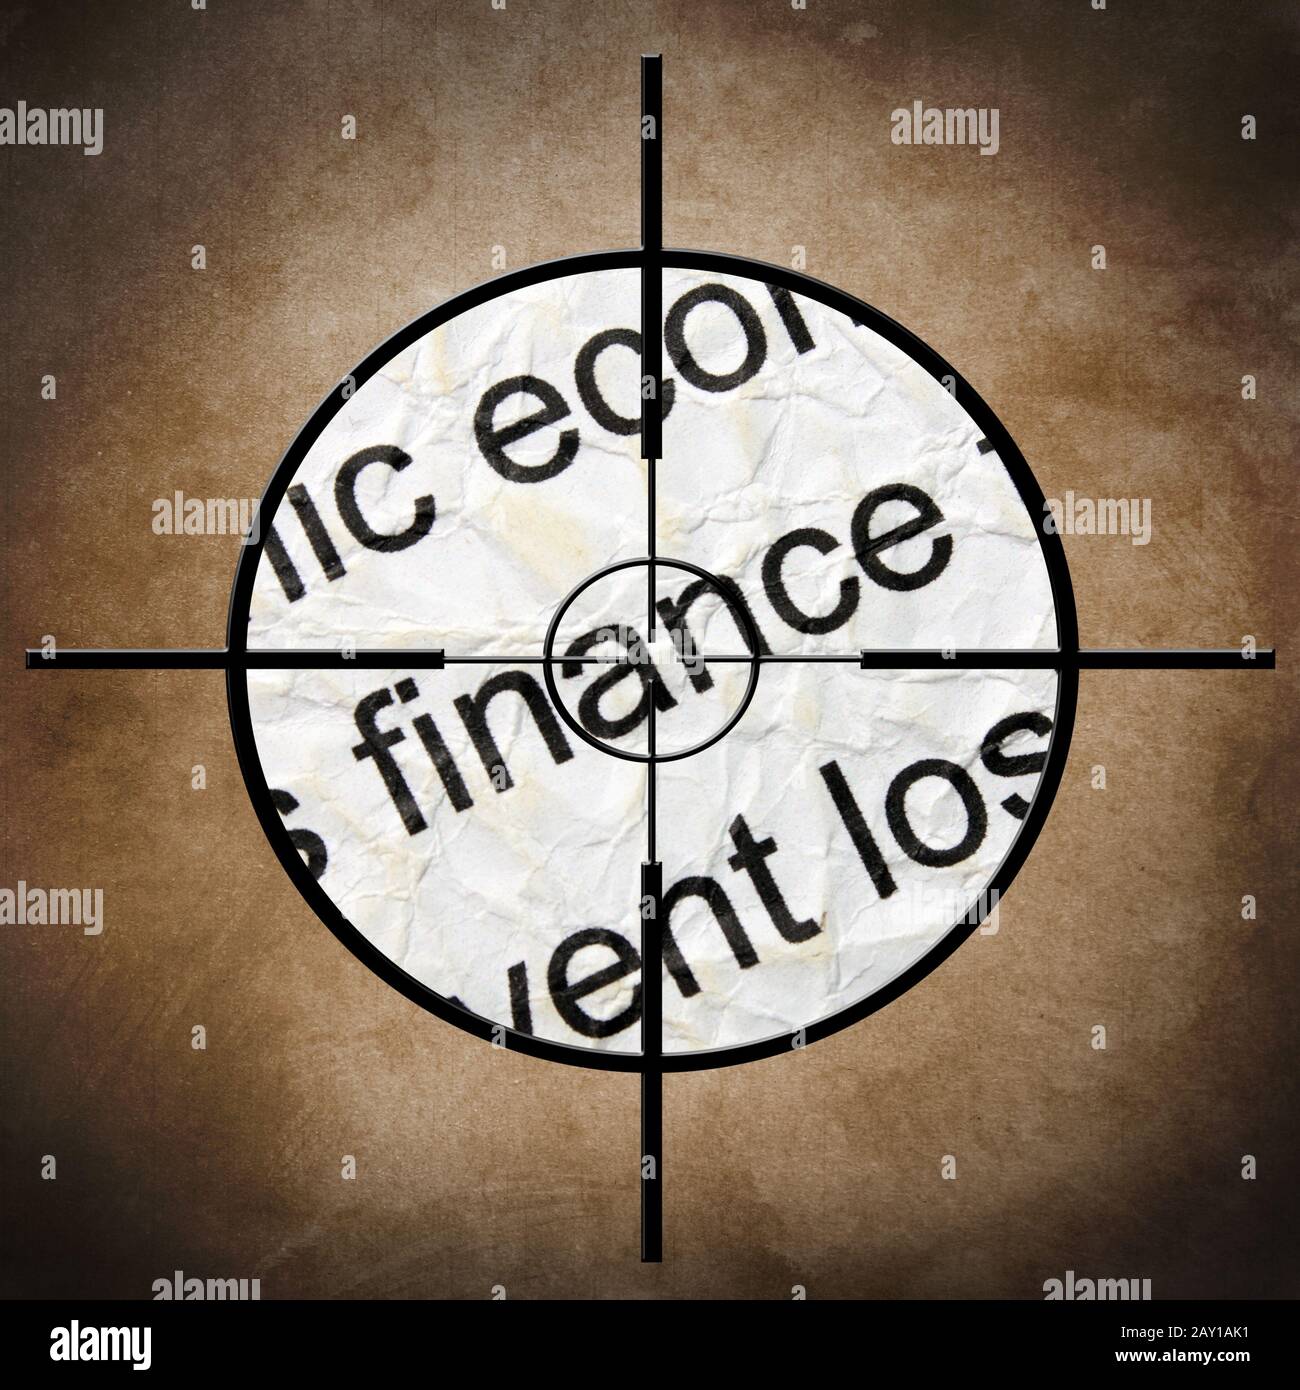 Finance target concept Stock Photo